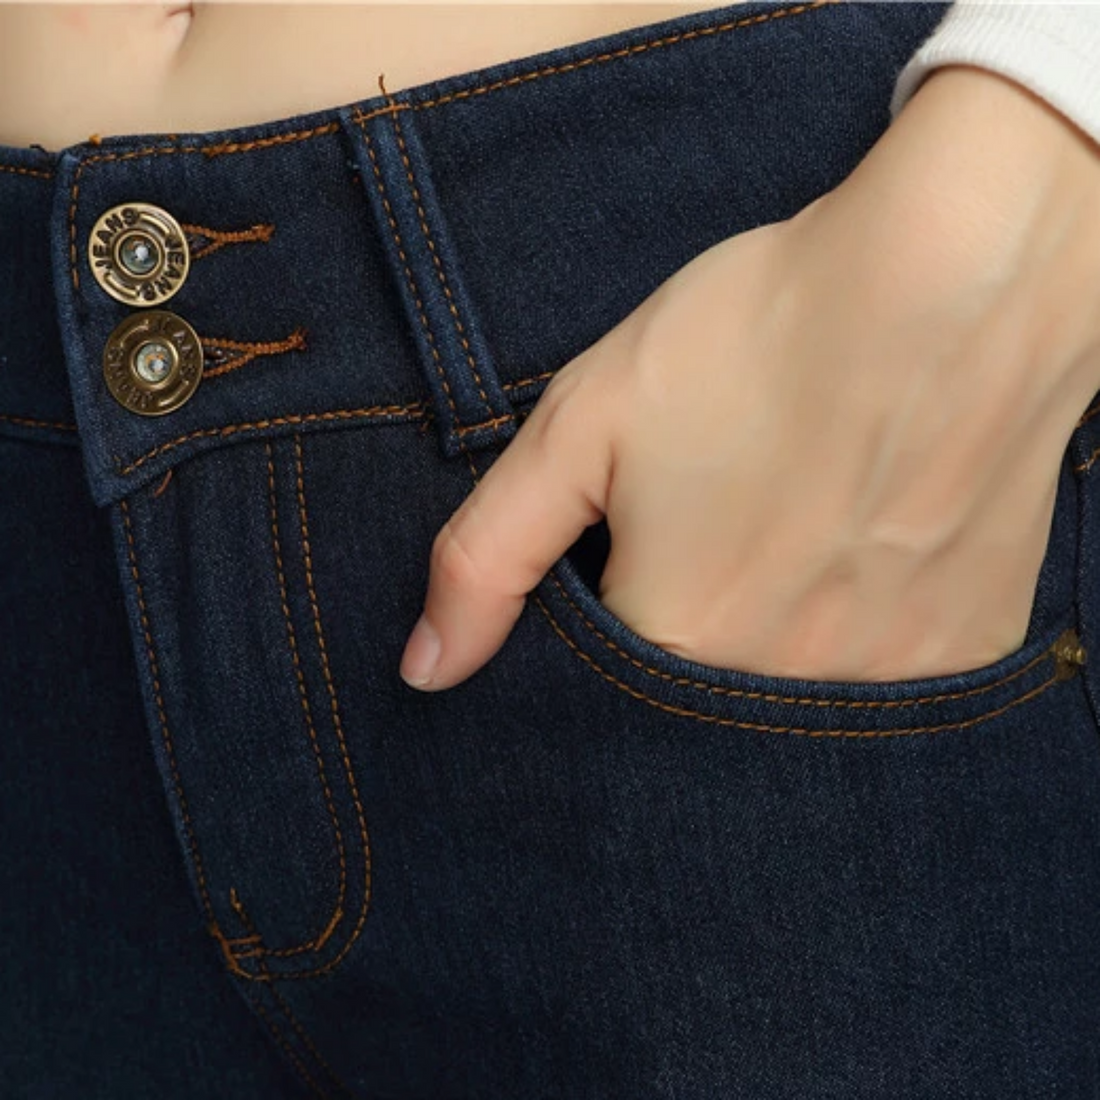 Women's Winter Casual High-Waist Skinny Warm Jeans